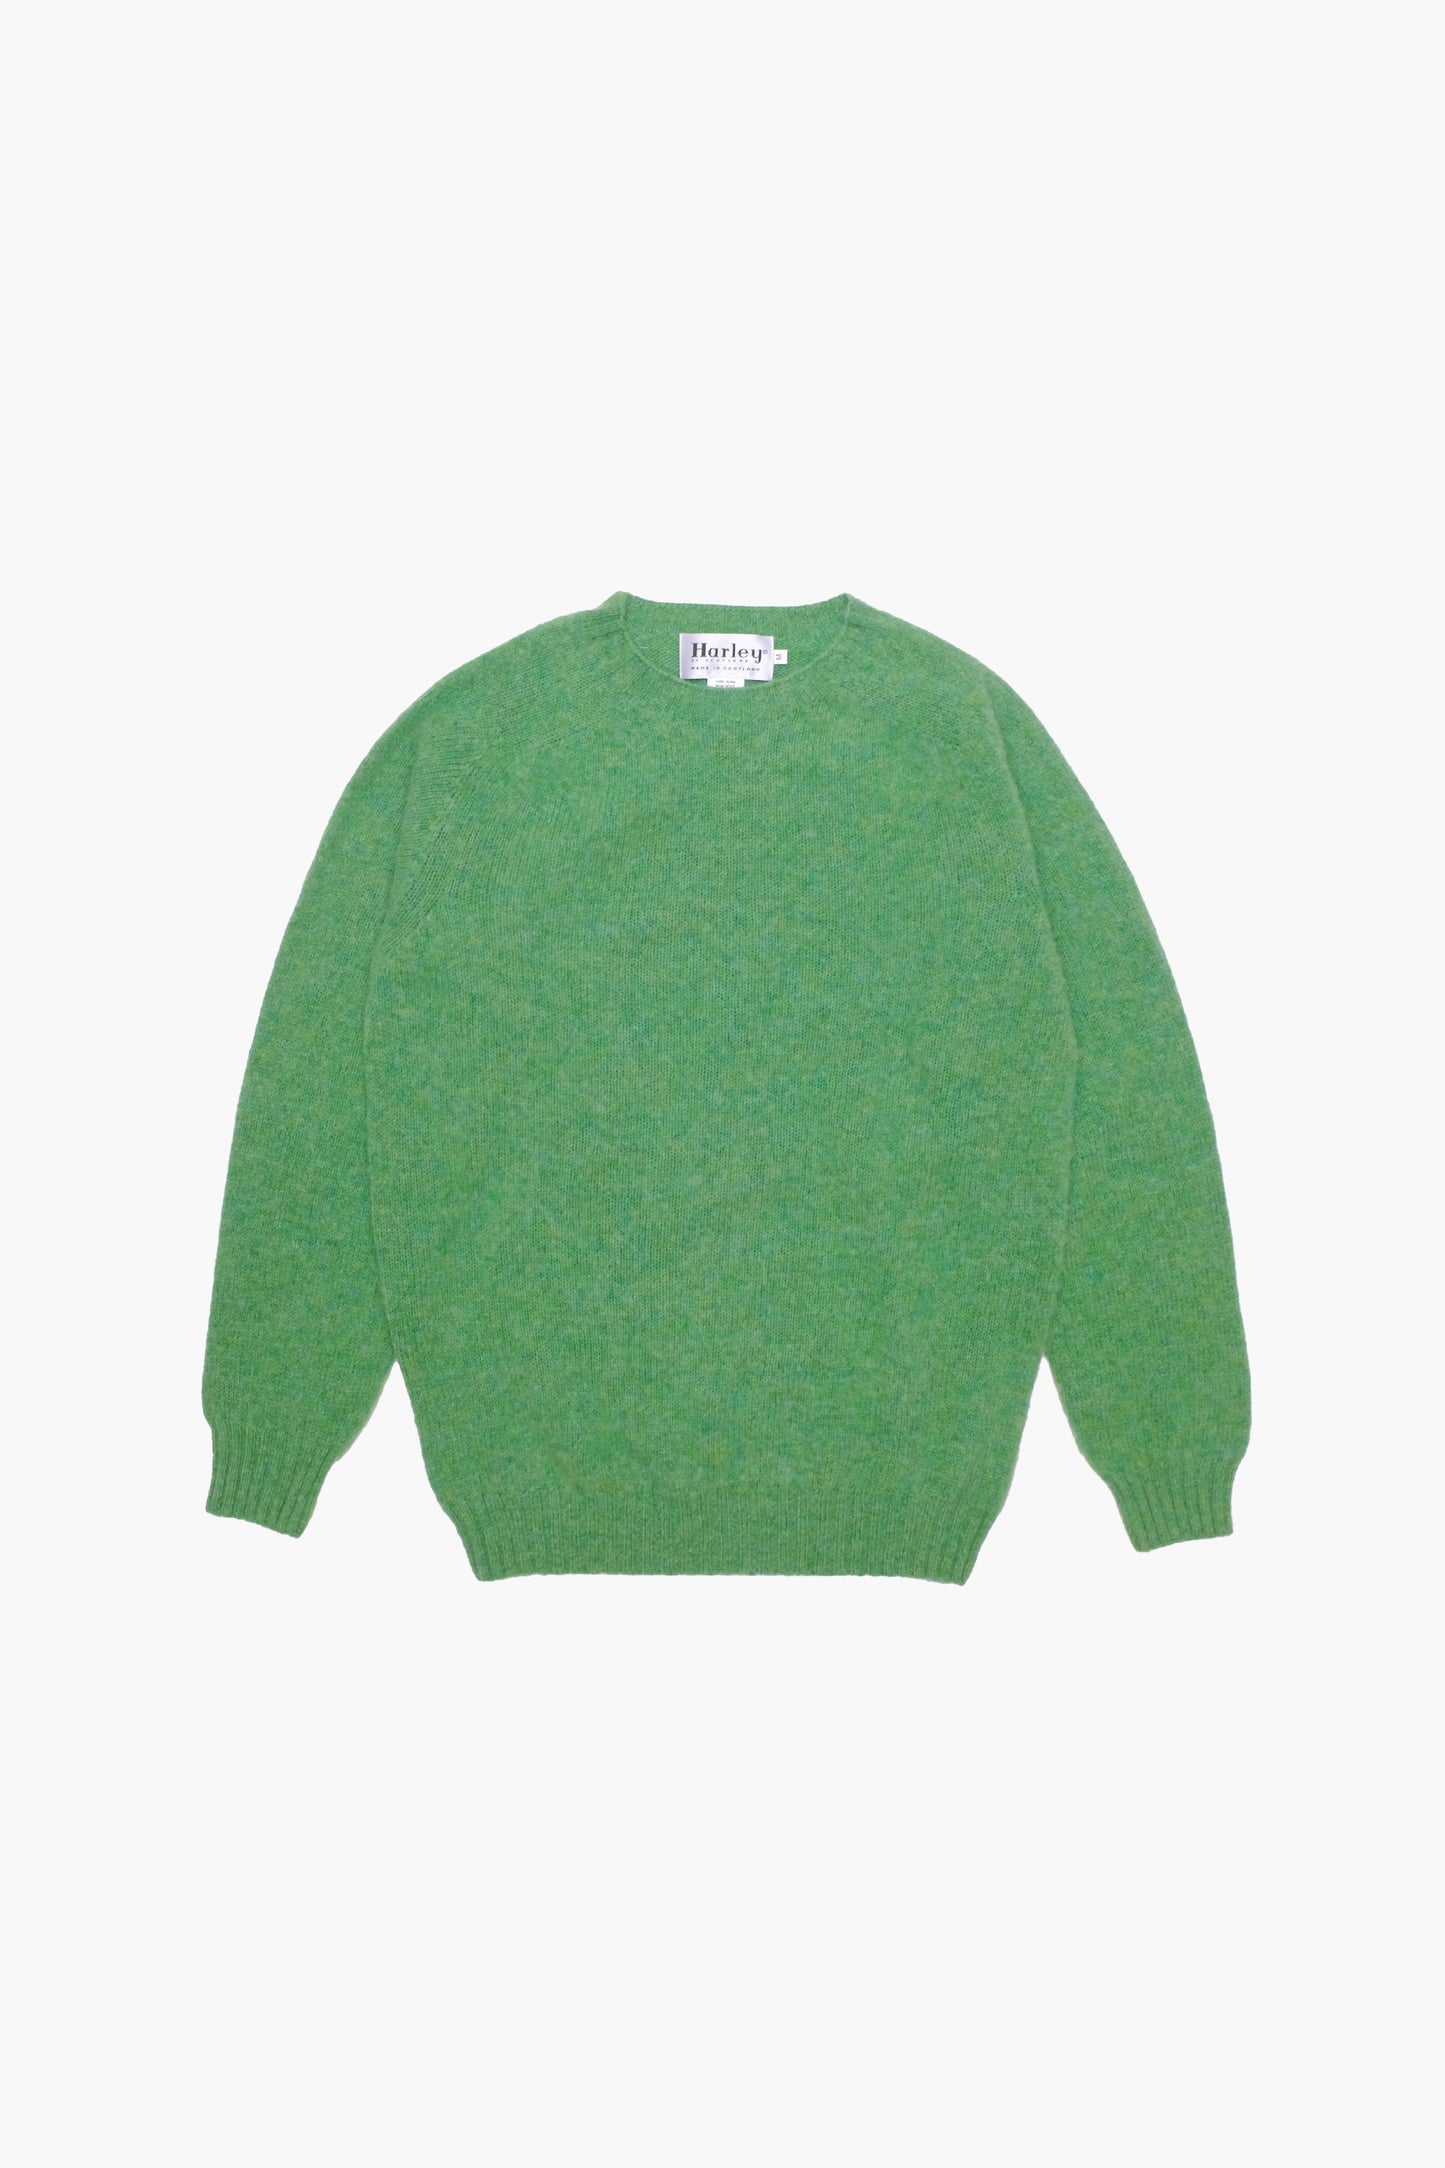 Shaggy Dog Sweater - Mint